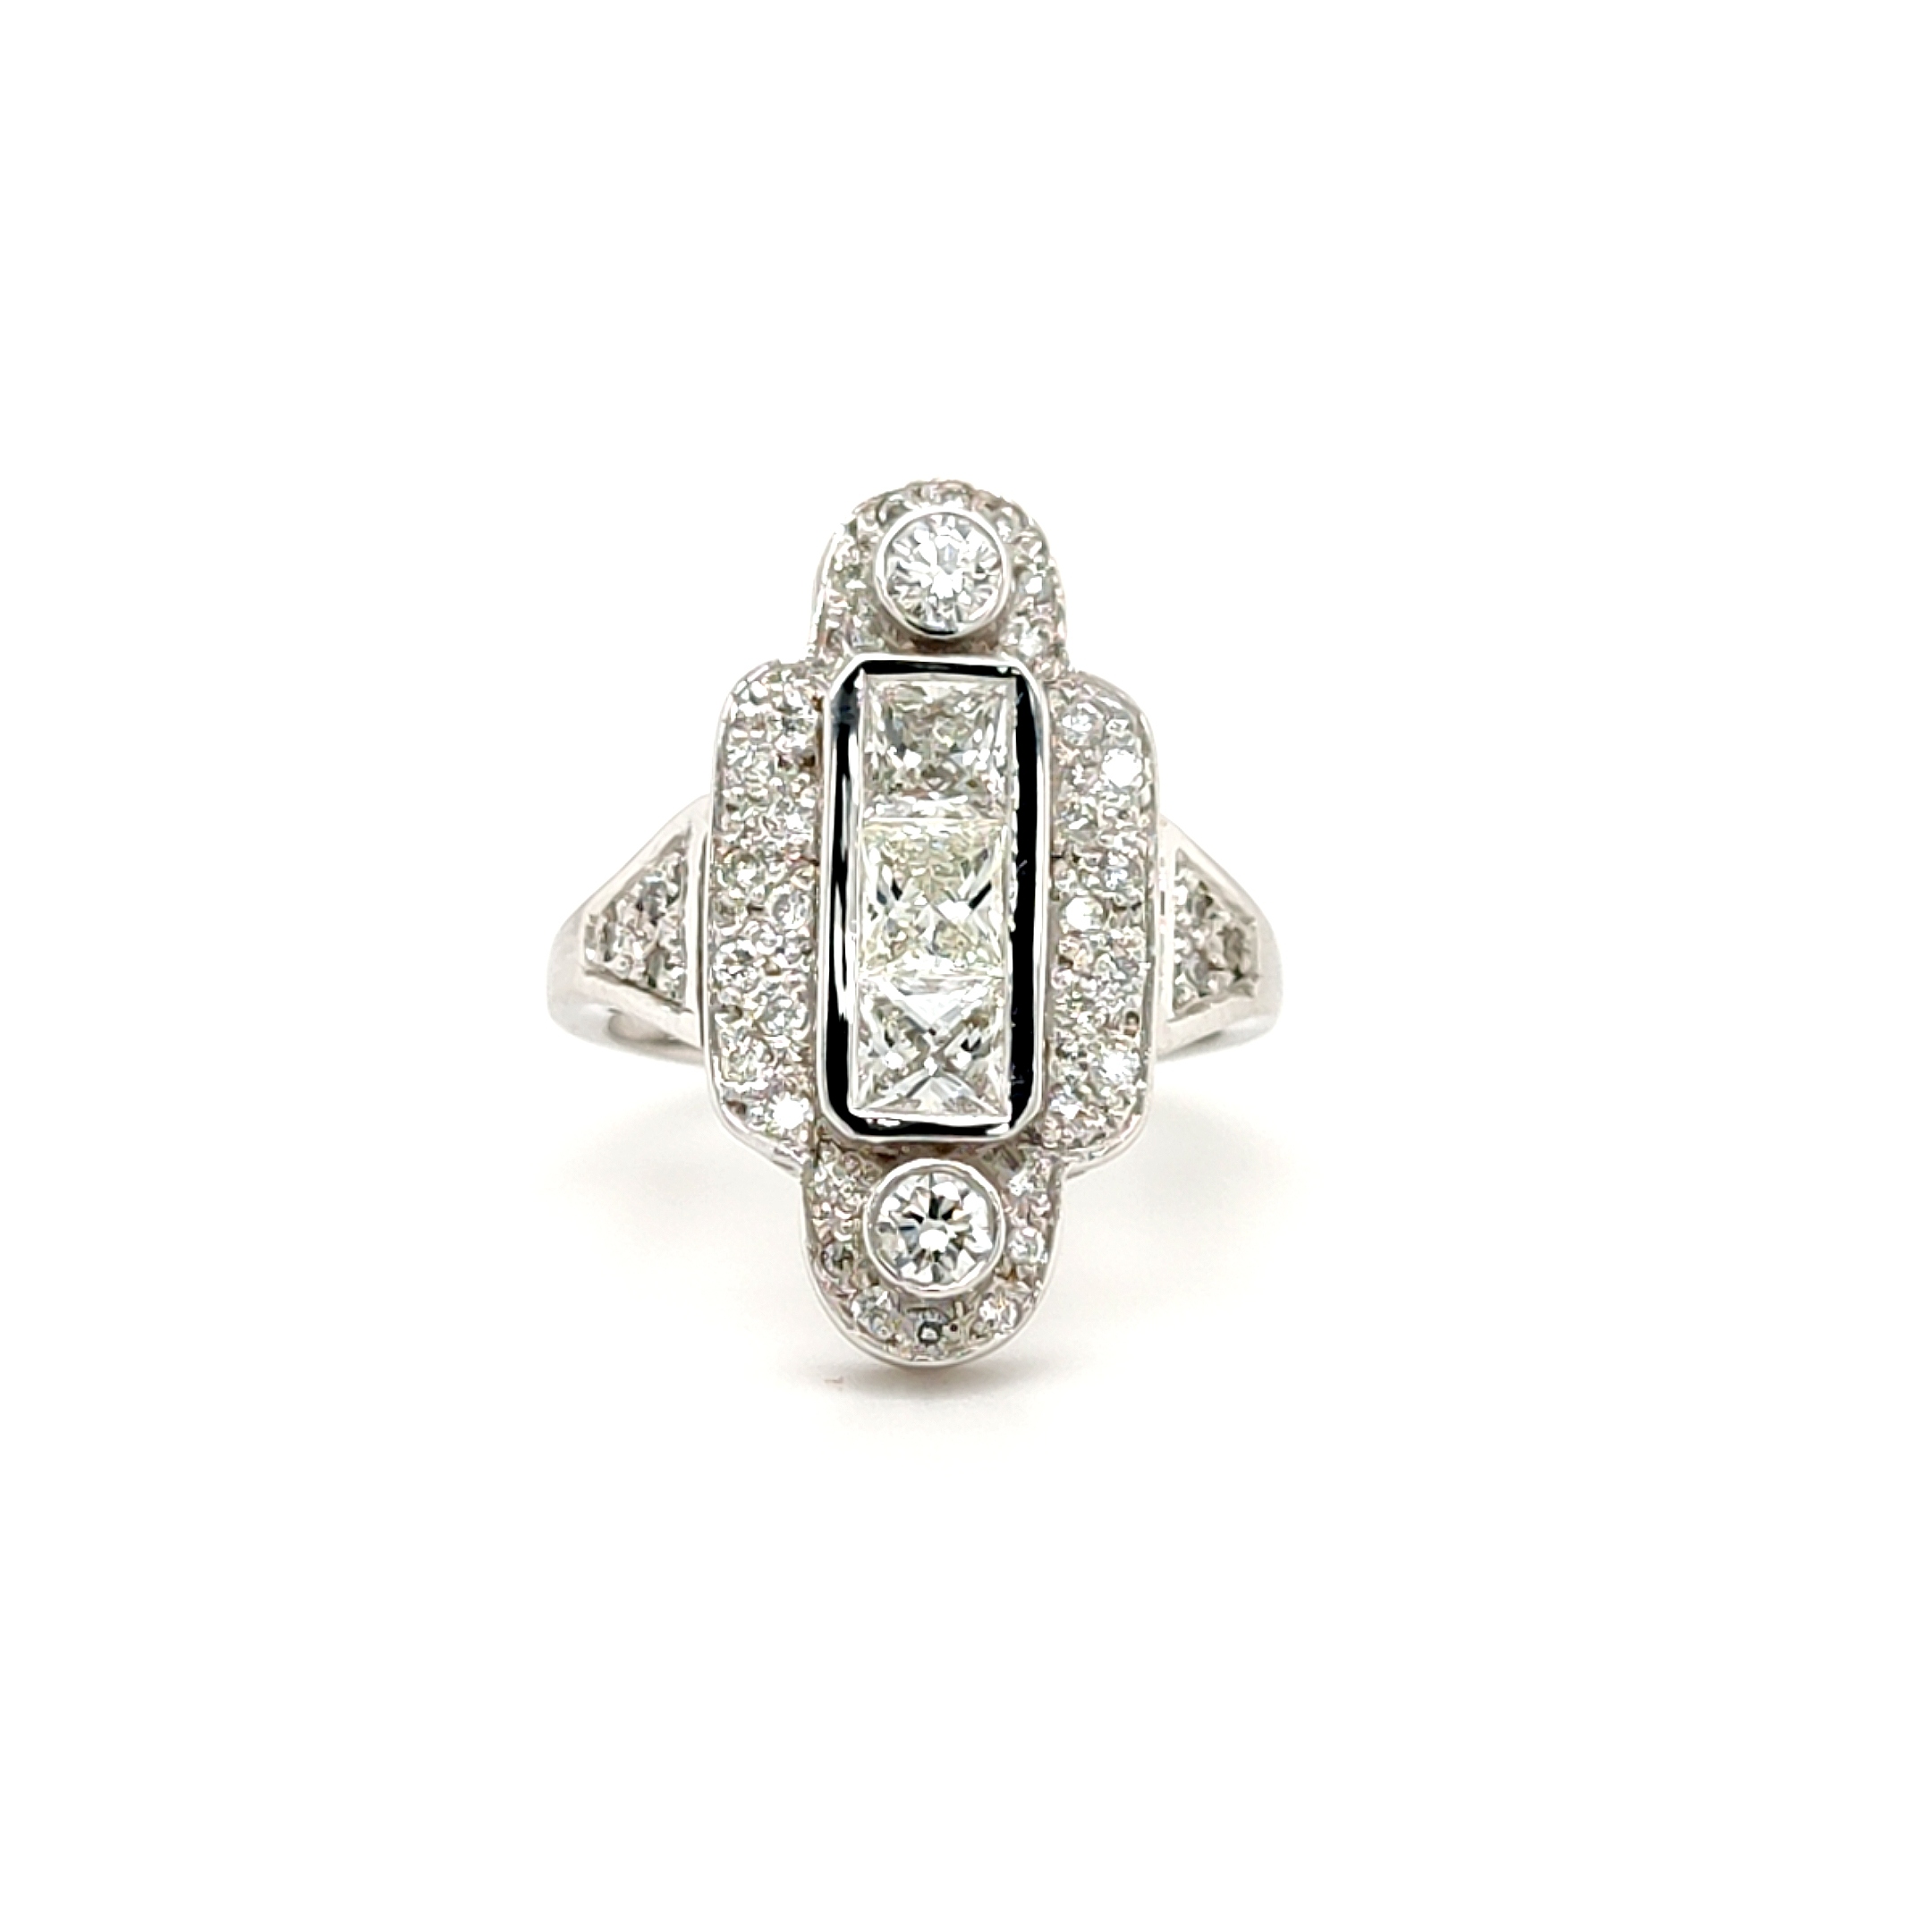 18ct White Gold Vintage Design Diamond Cocktail Ring – 1.75ct Assessed